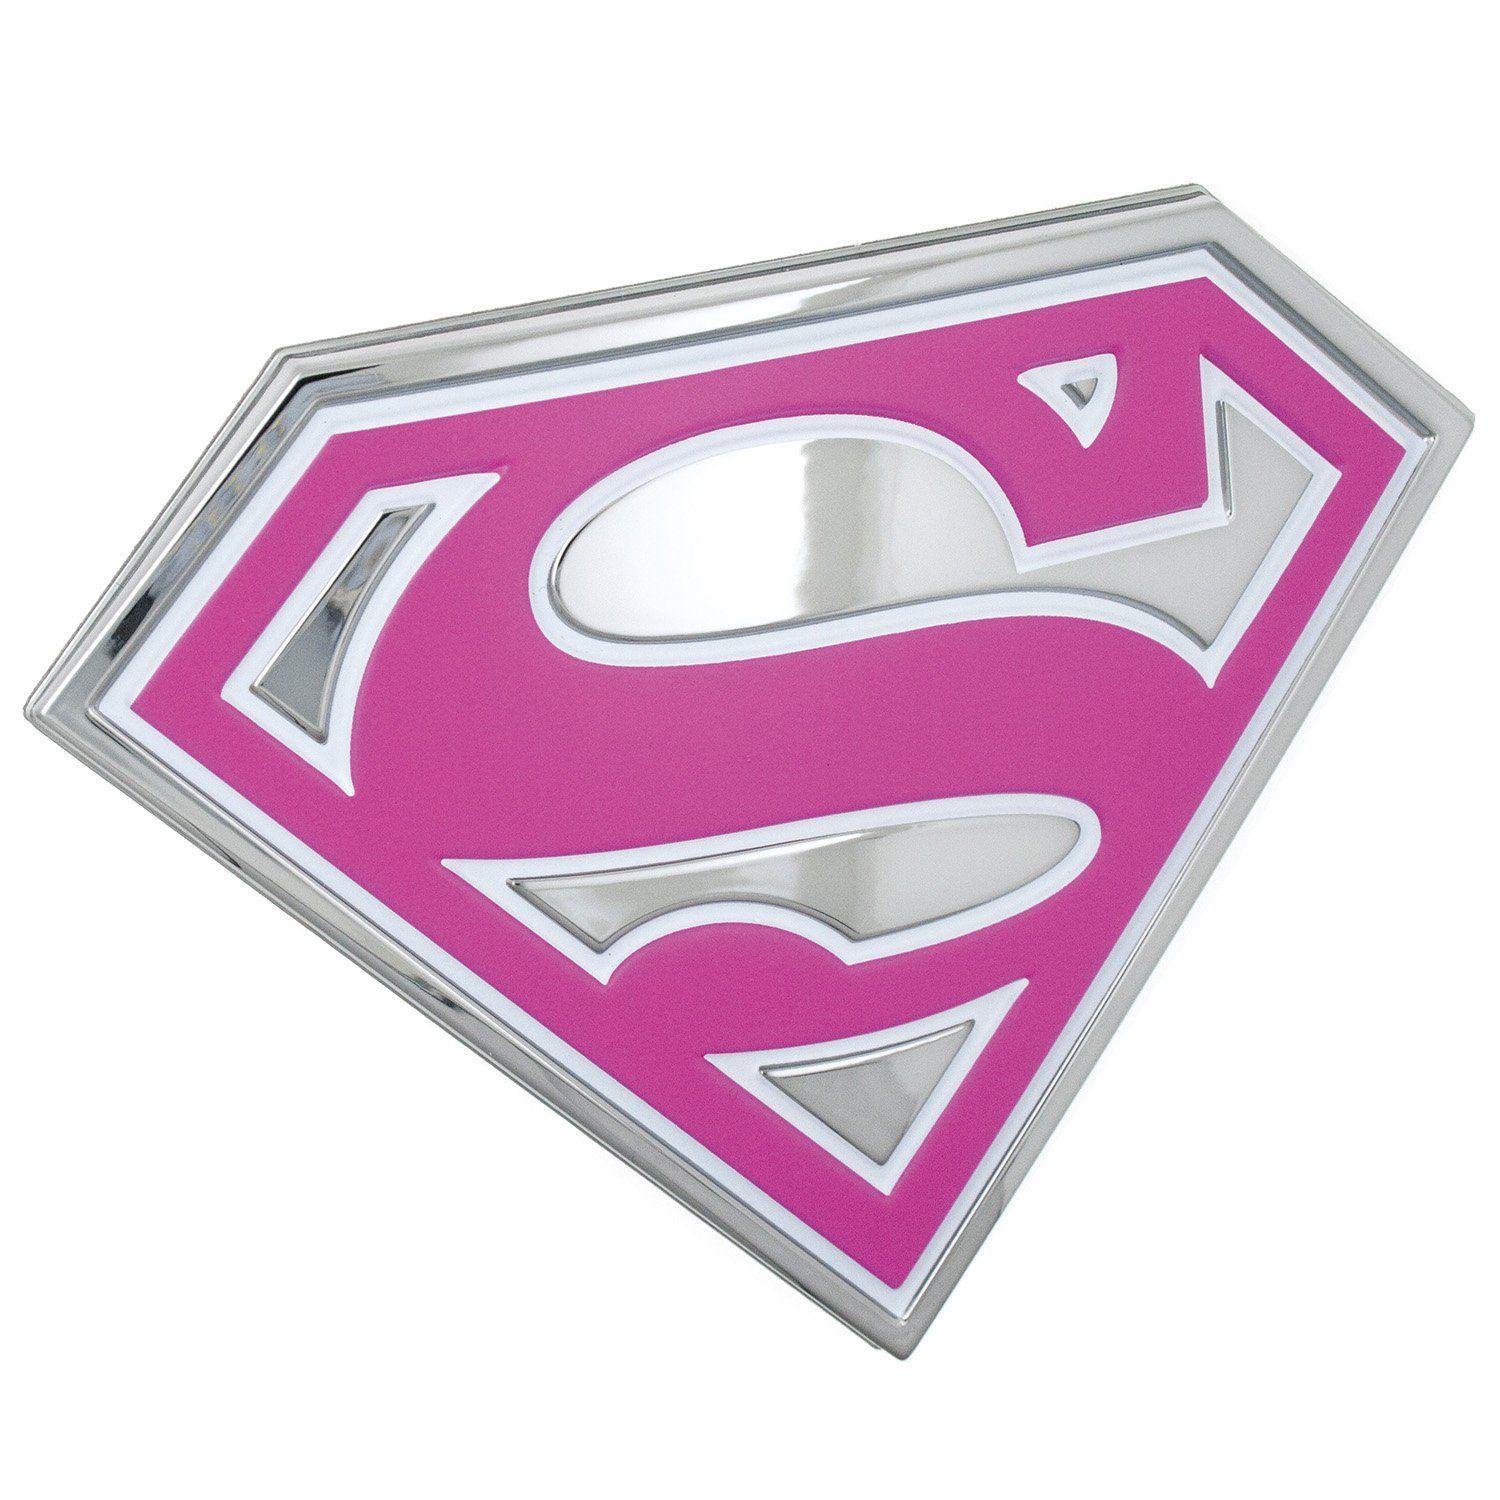 Supergirl Logo - Amazon.com: Supergirl Logo 3D Car Emblem (Chrome, Pink, White) DC ...